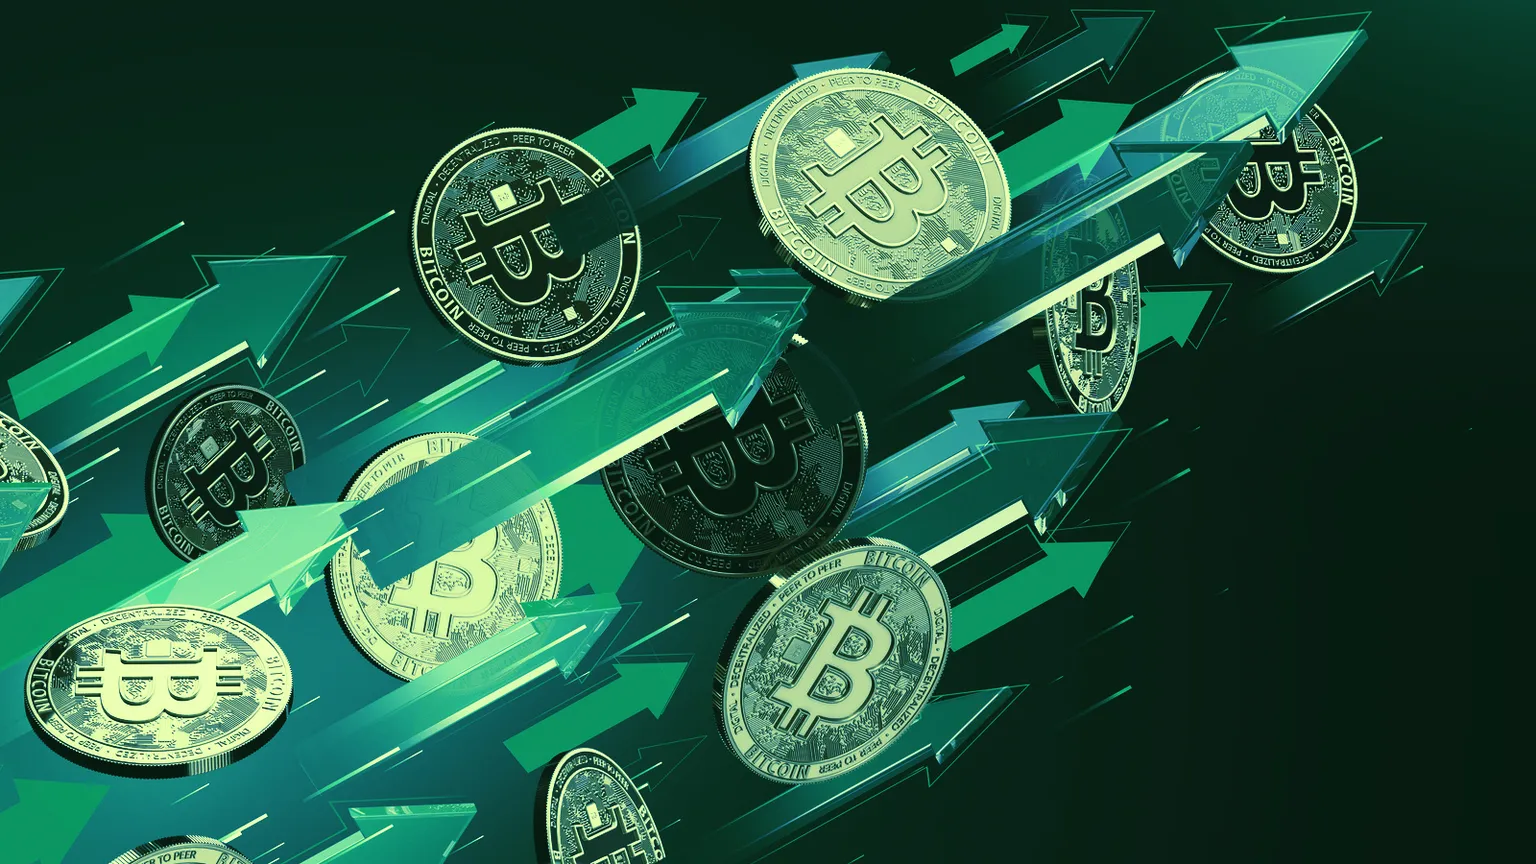 Bitcoin subiendo. Imagen: Shutterstock